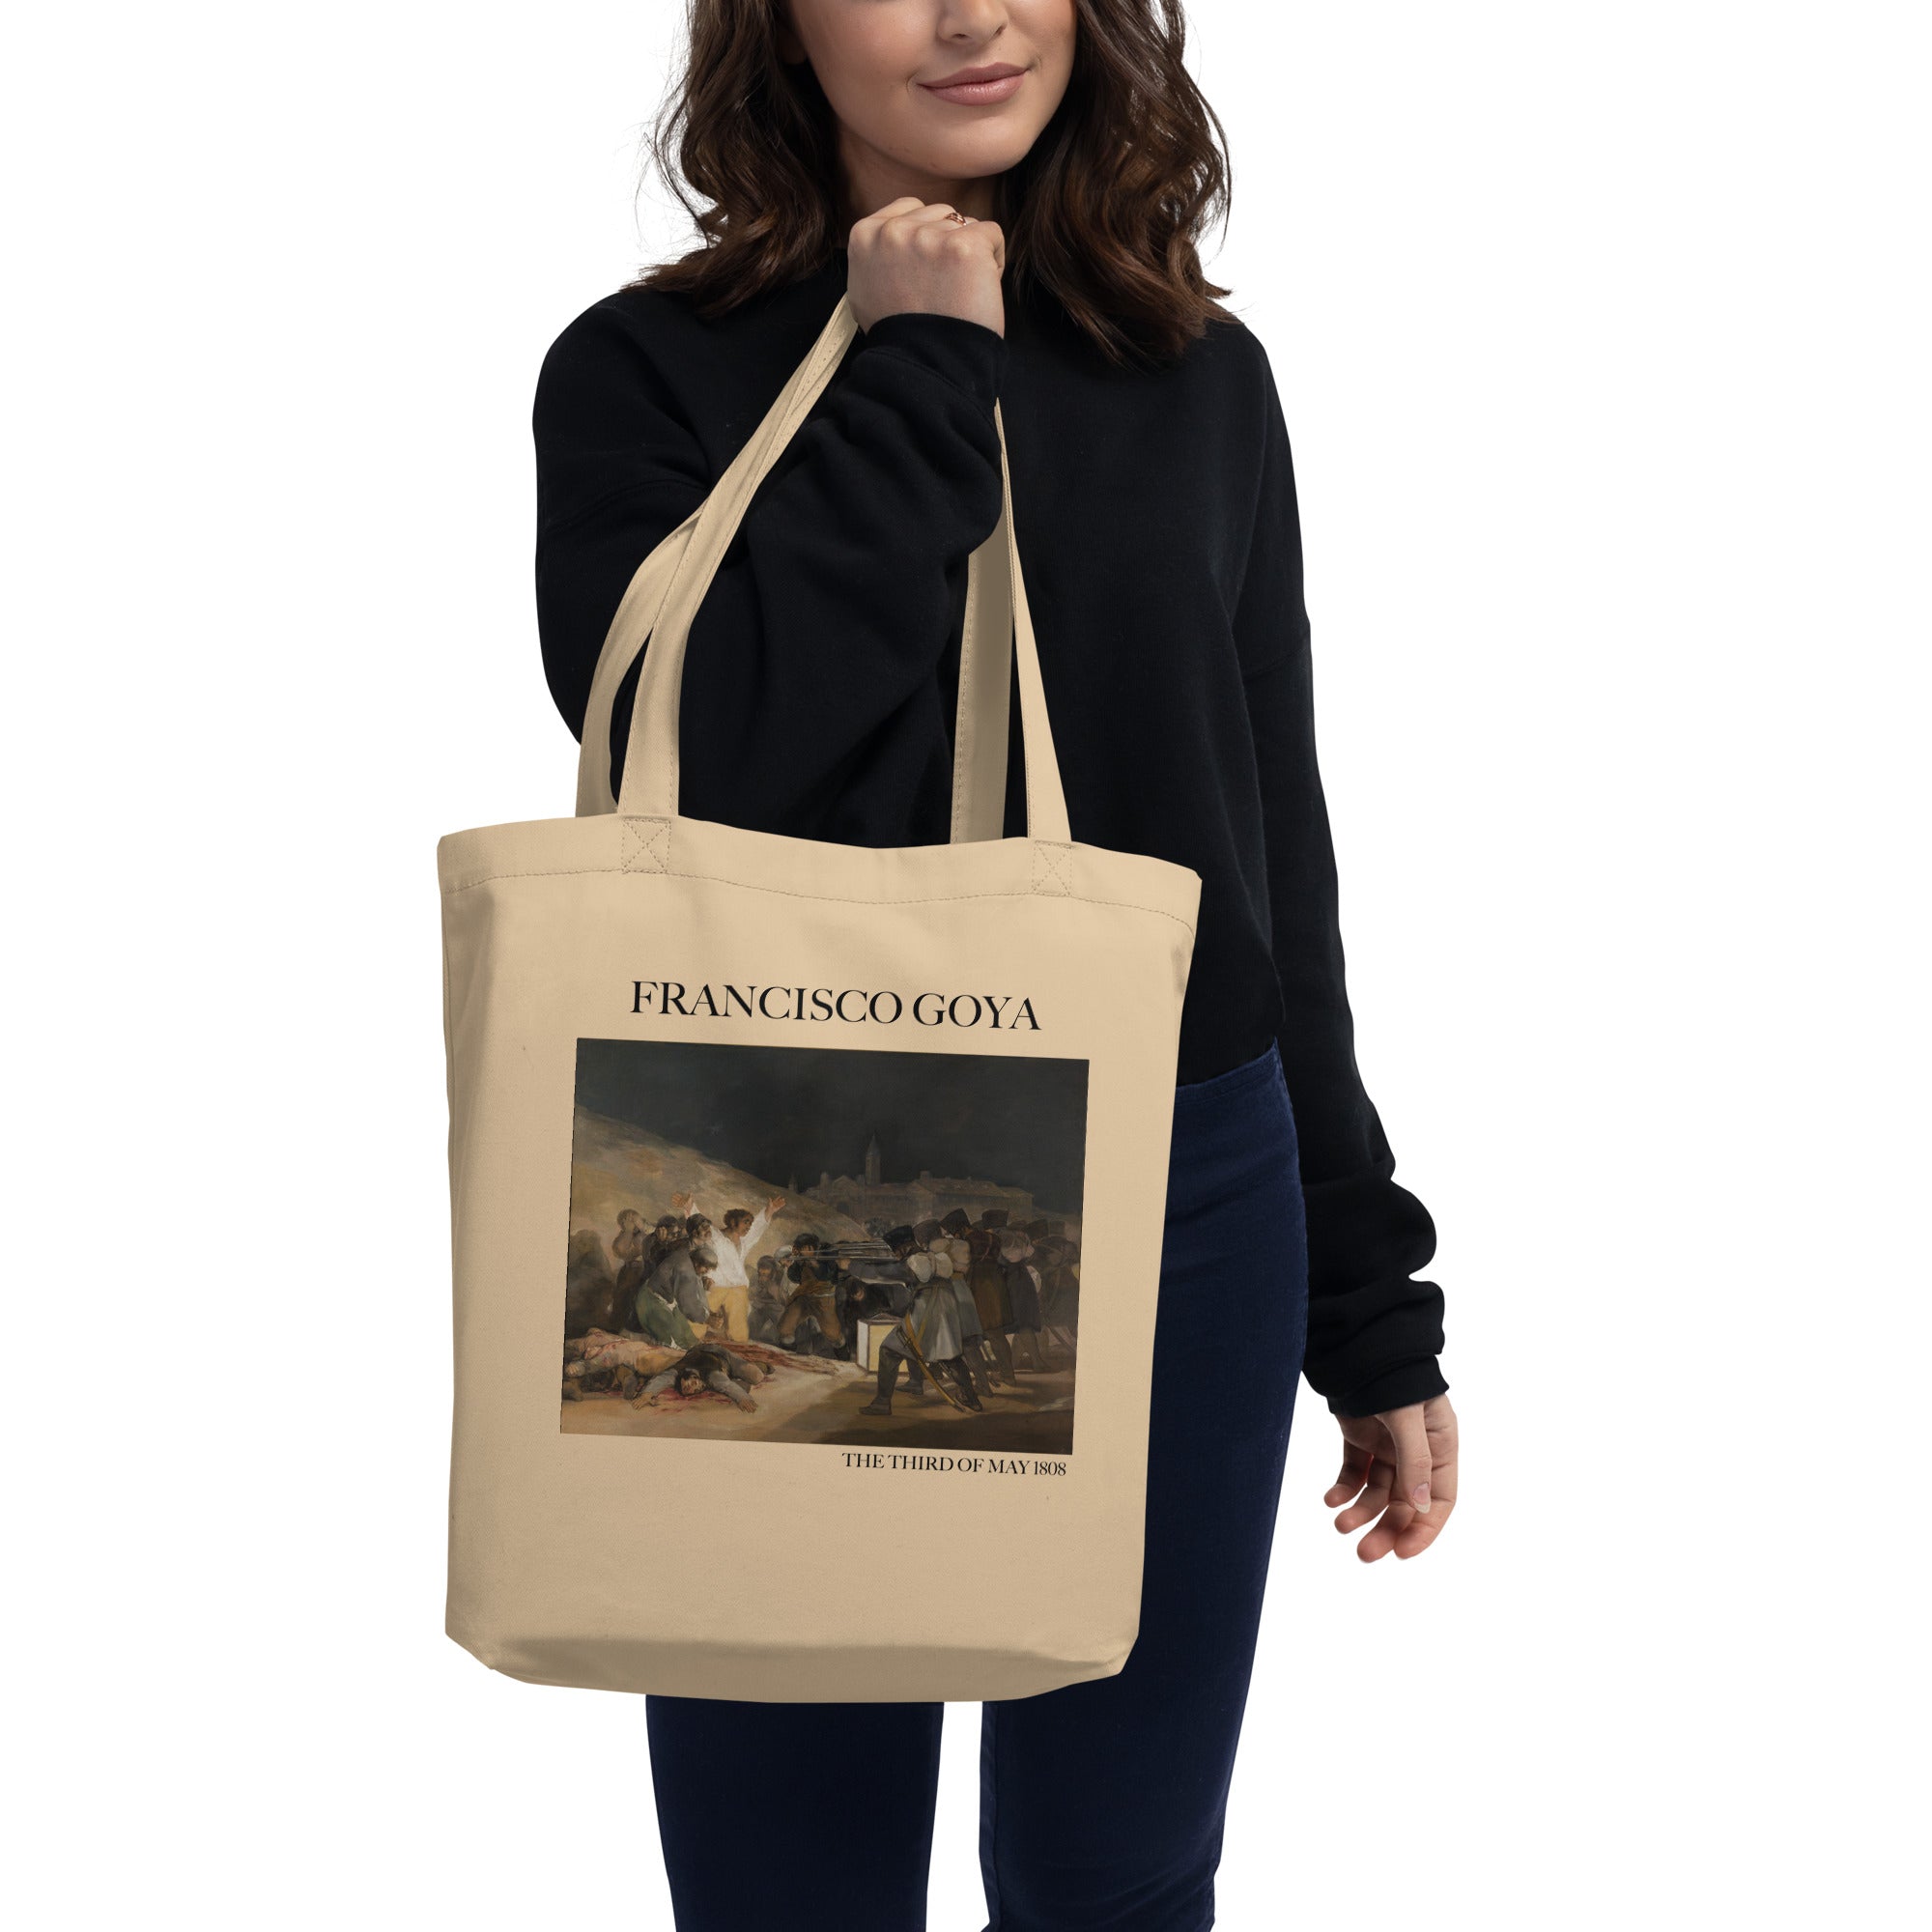 Francisco Goya 'The Third of May 1808' Famous Painting Totebag | Eco Friendly Art Tote Bag